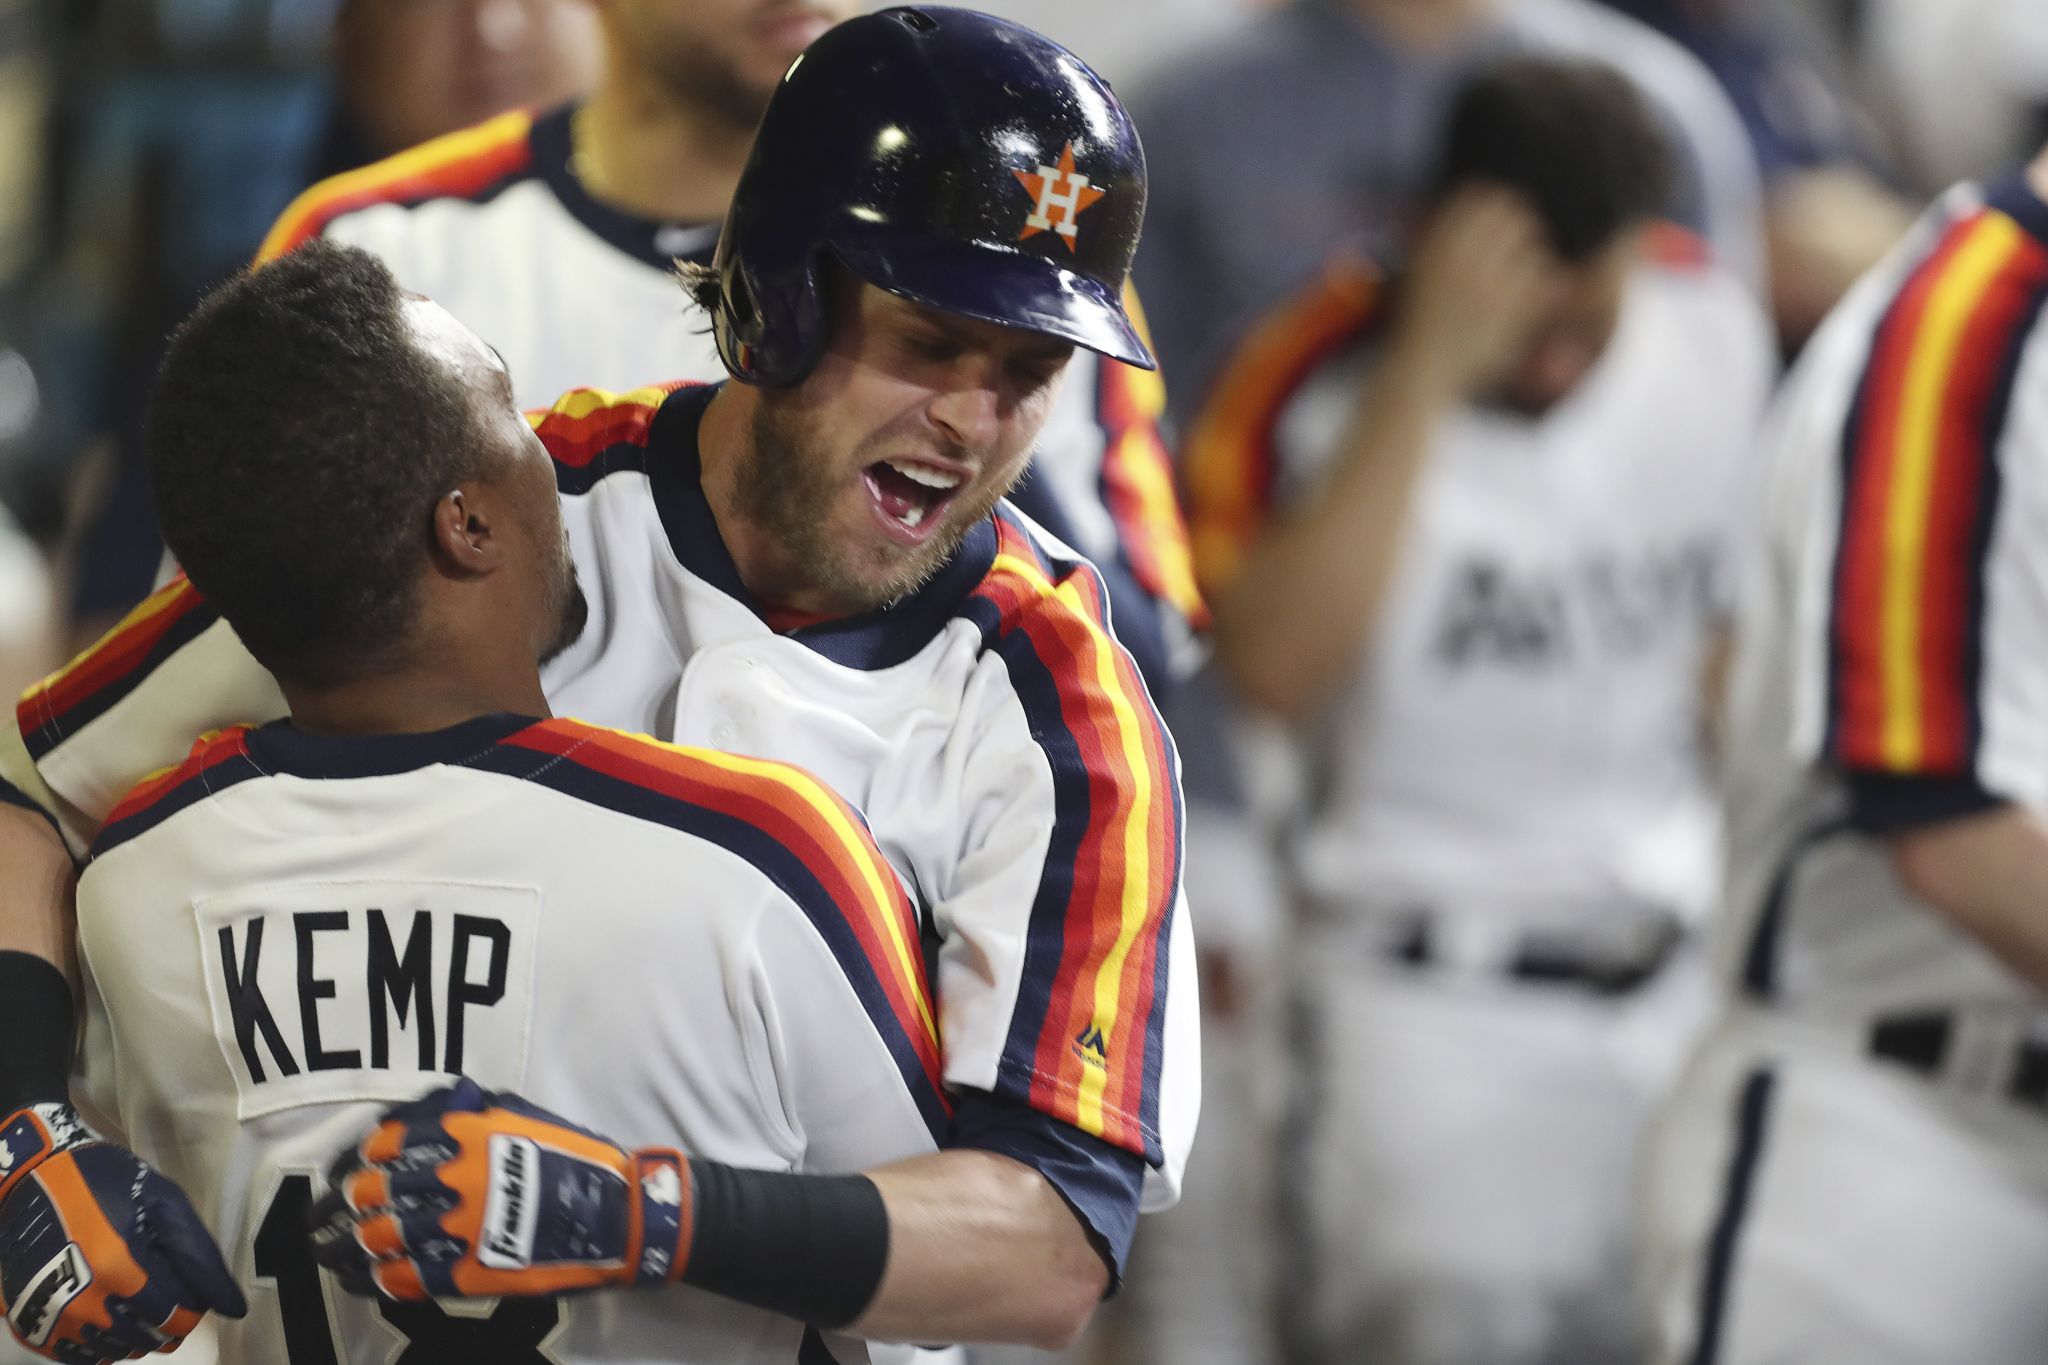 Astros promote Vanderbilt standout Tony Kemp